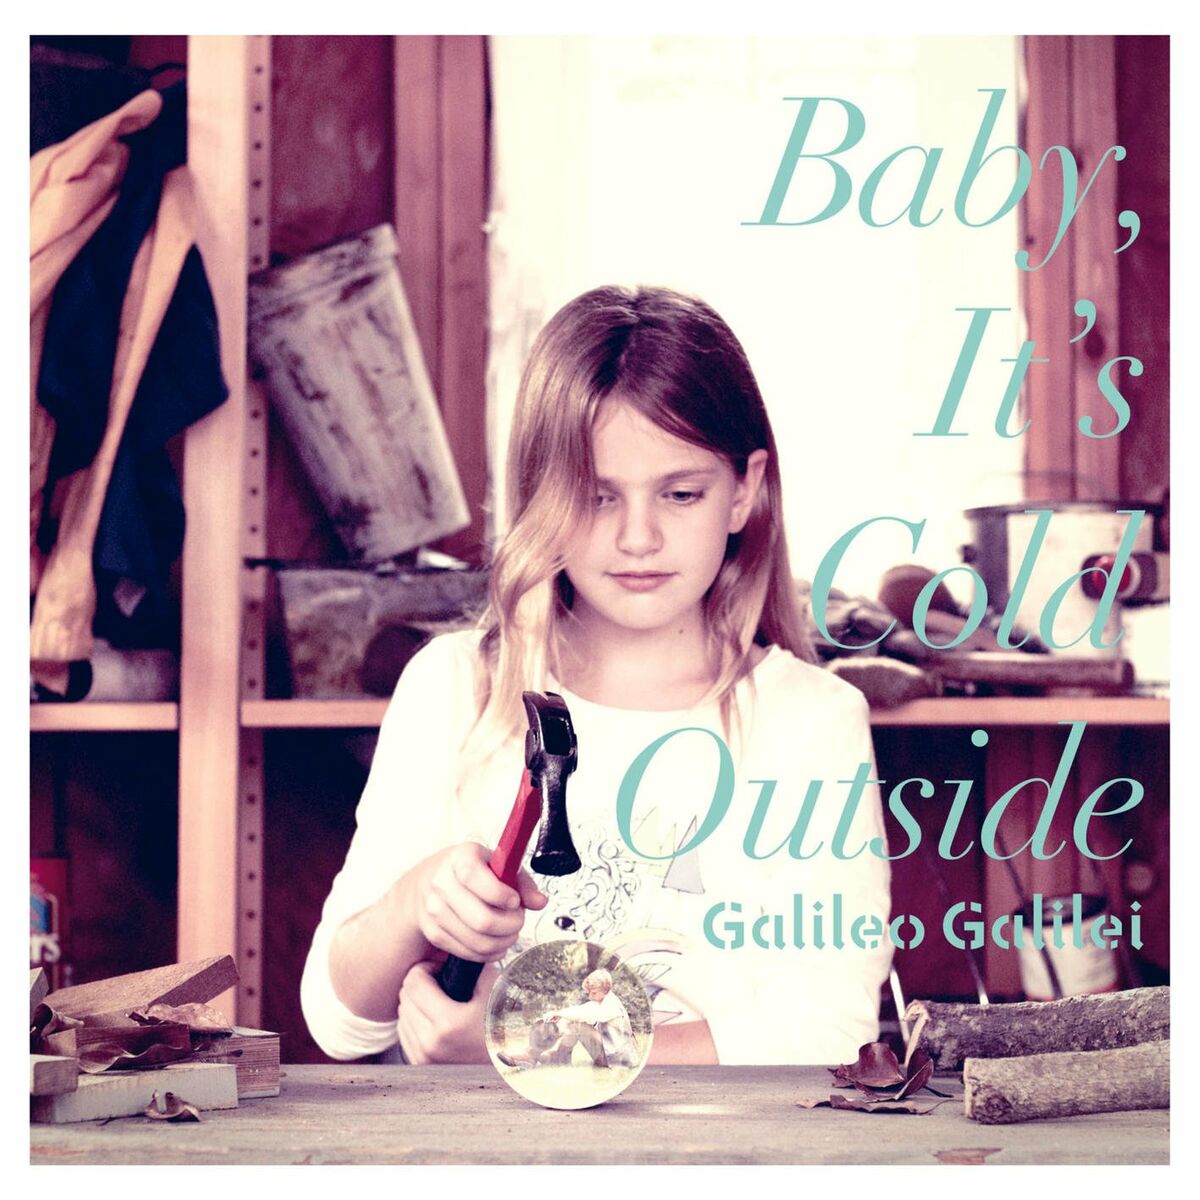 Galileo Galilei: albums, songs, playlists | Listen on Deezer